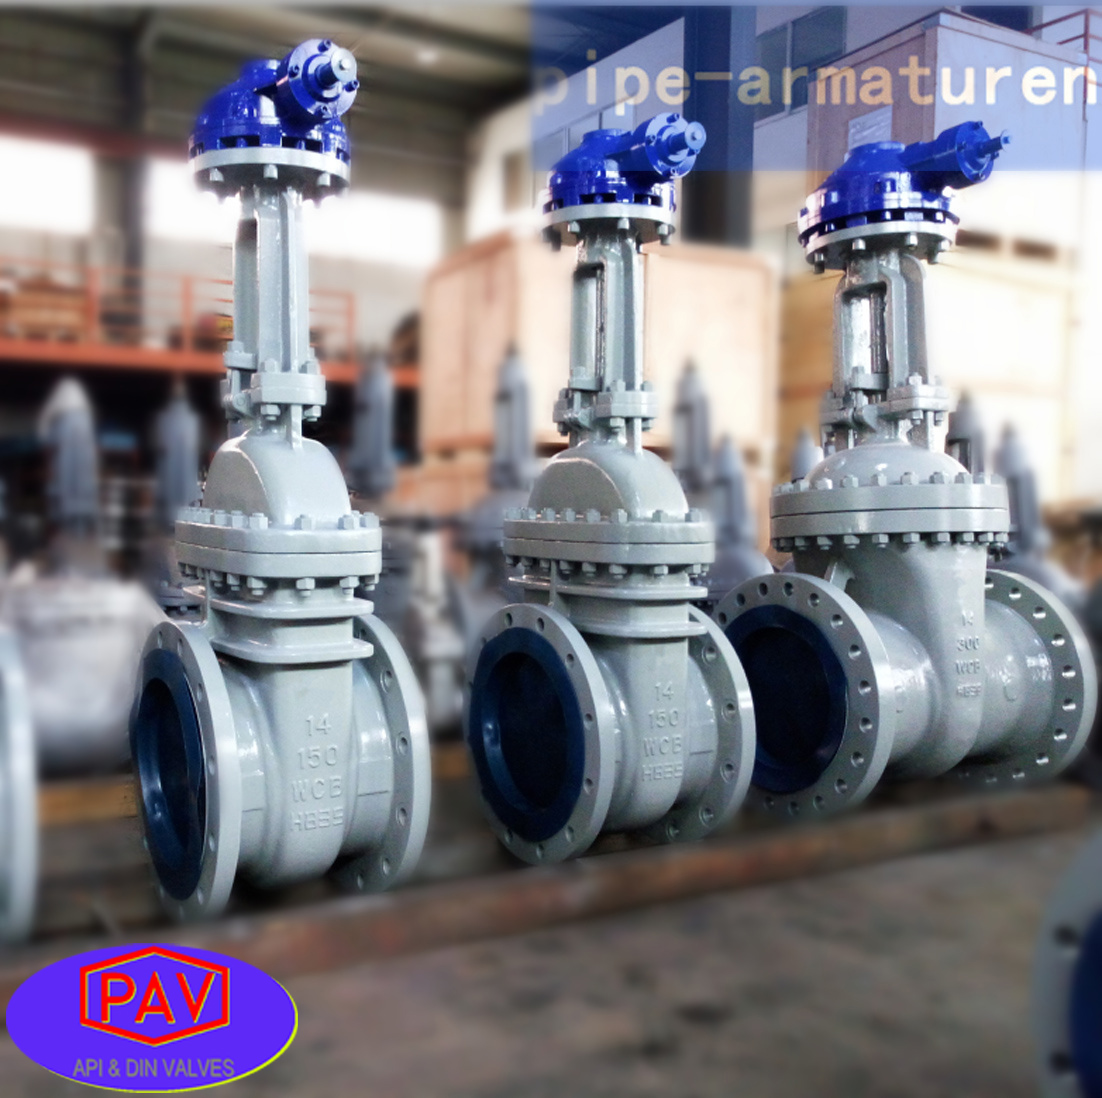 big size gate valve-PAV VALVE (pipe armaturen)valve manufacturer